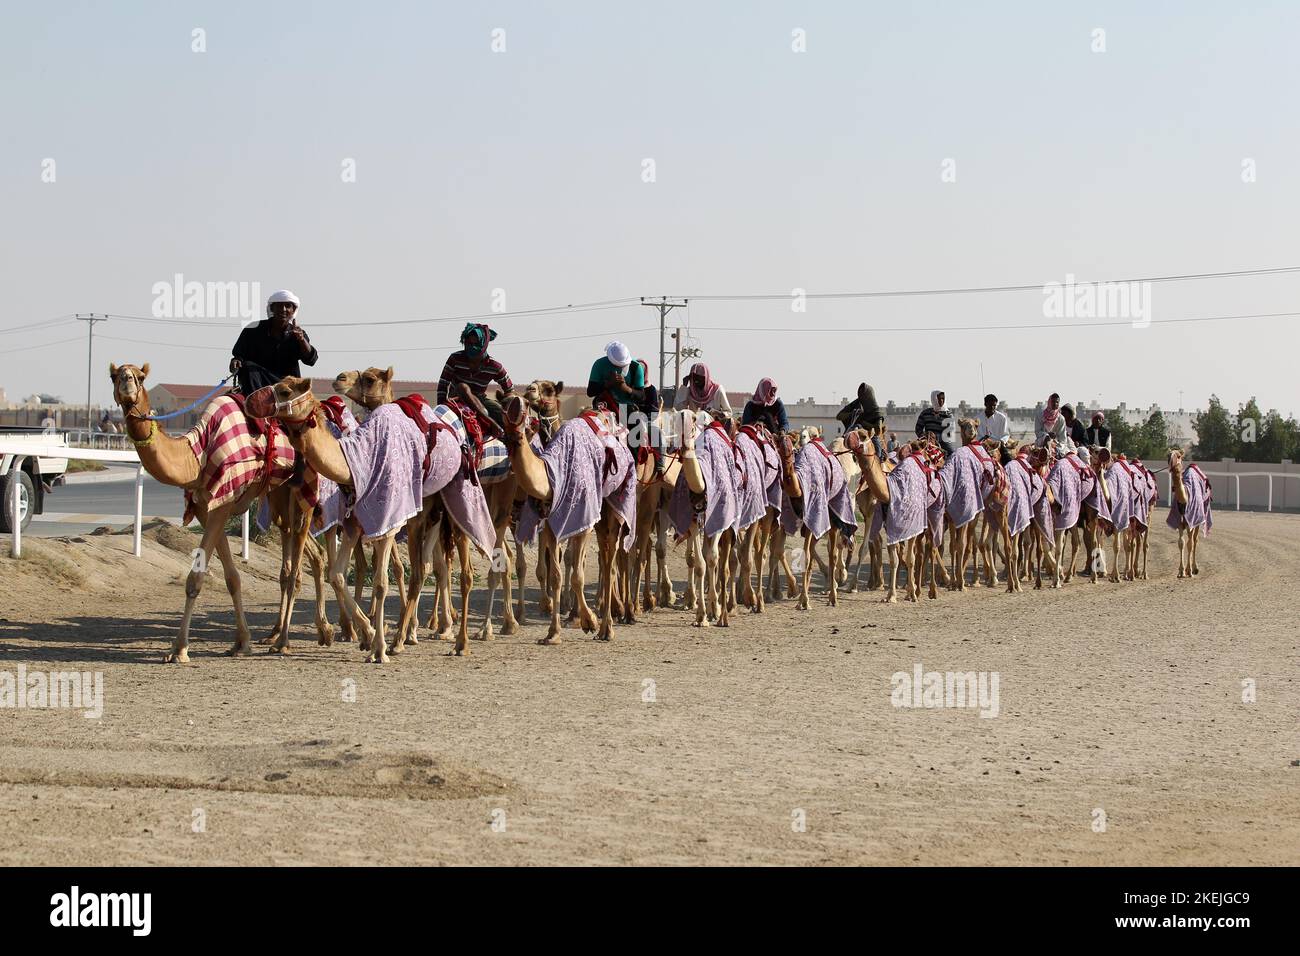 Kamele in Qatar © diebilderwelt / Alamy Stock Foto Stock